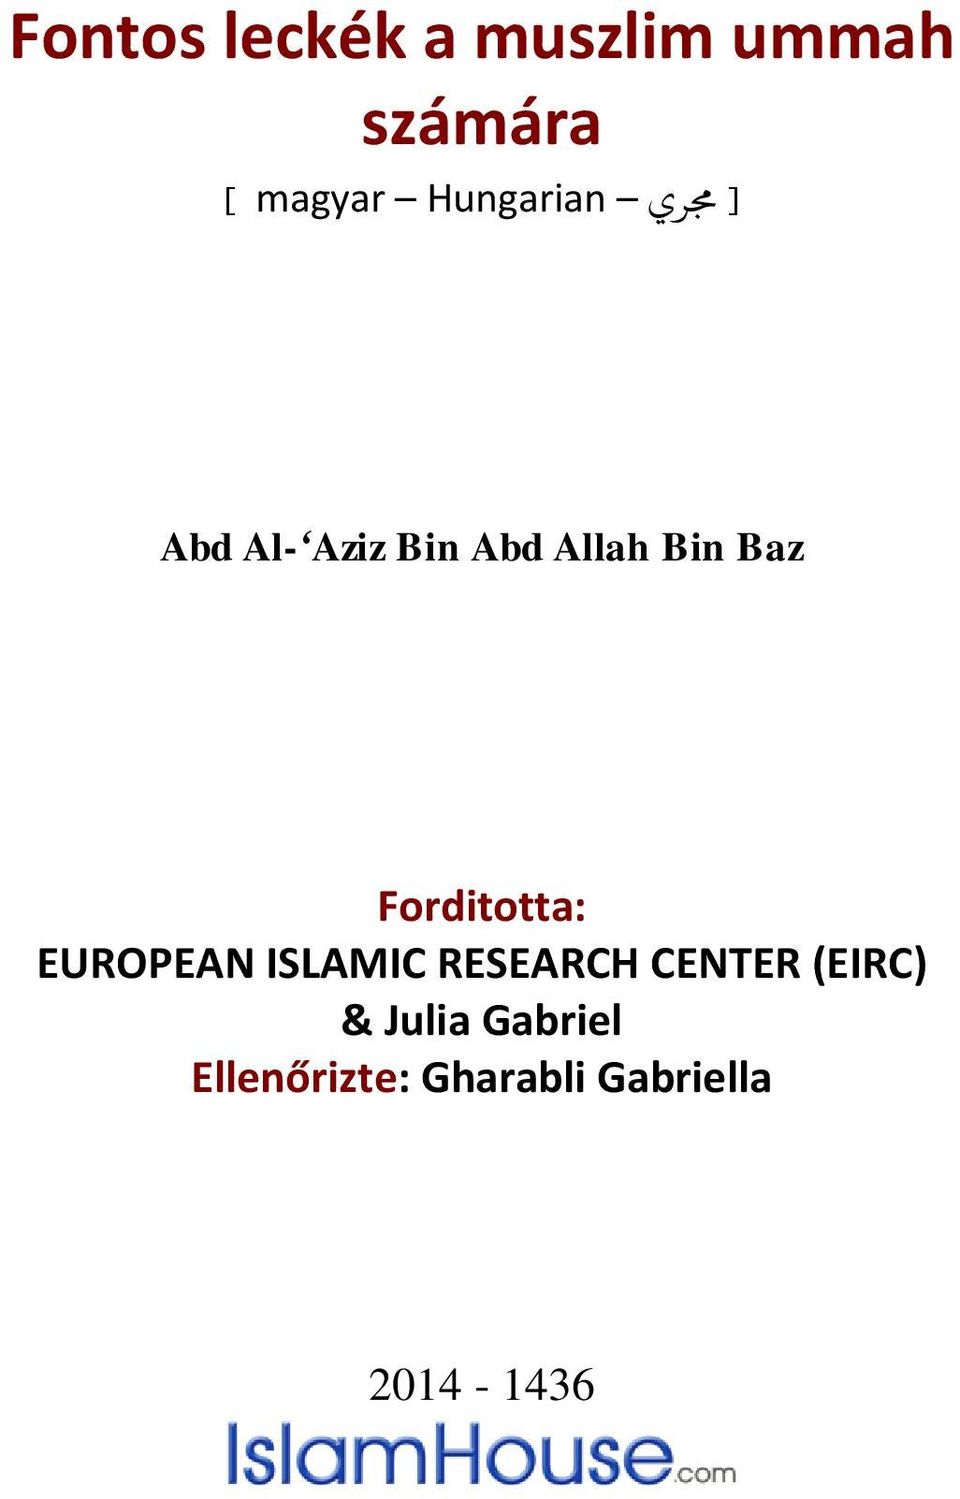 Baz Forditotta: EUROPEAN ISLAMIC RESEARCH CENTER